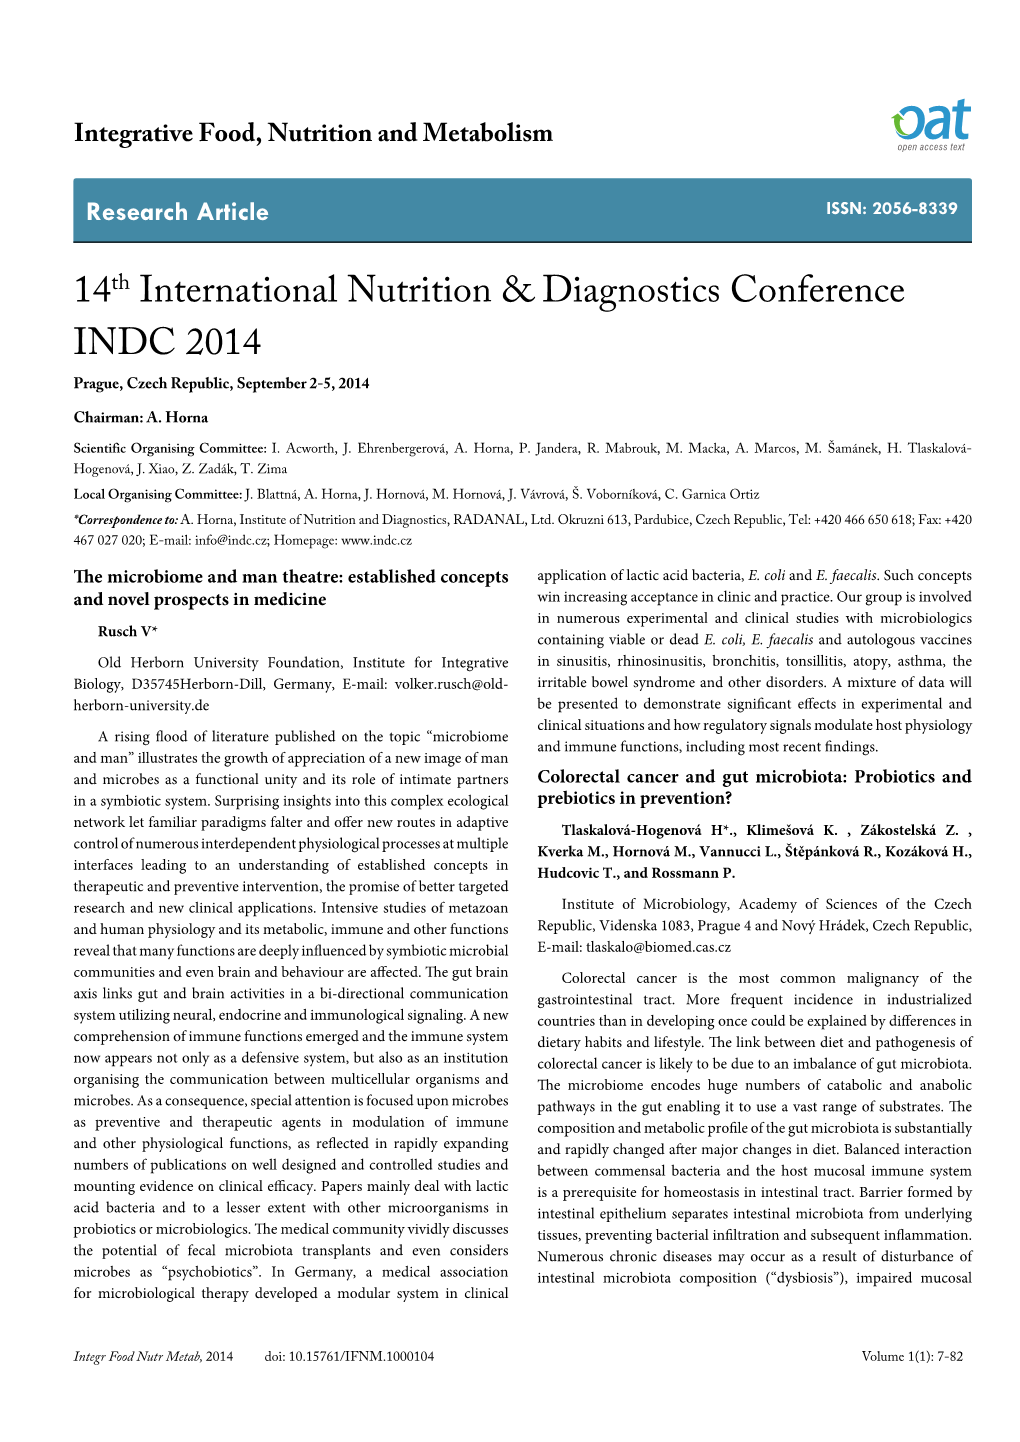 14Th International Nutrition & Diagnostics Conference INDC 2014